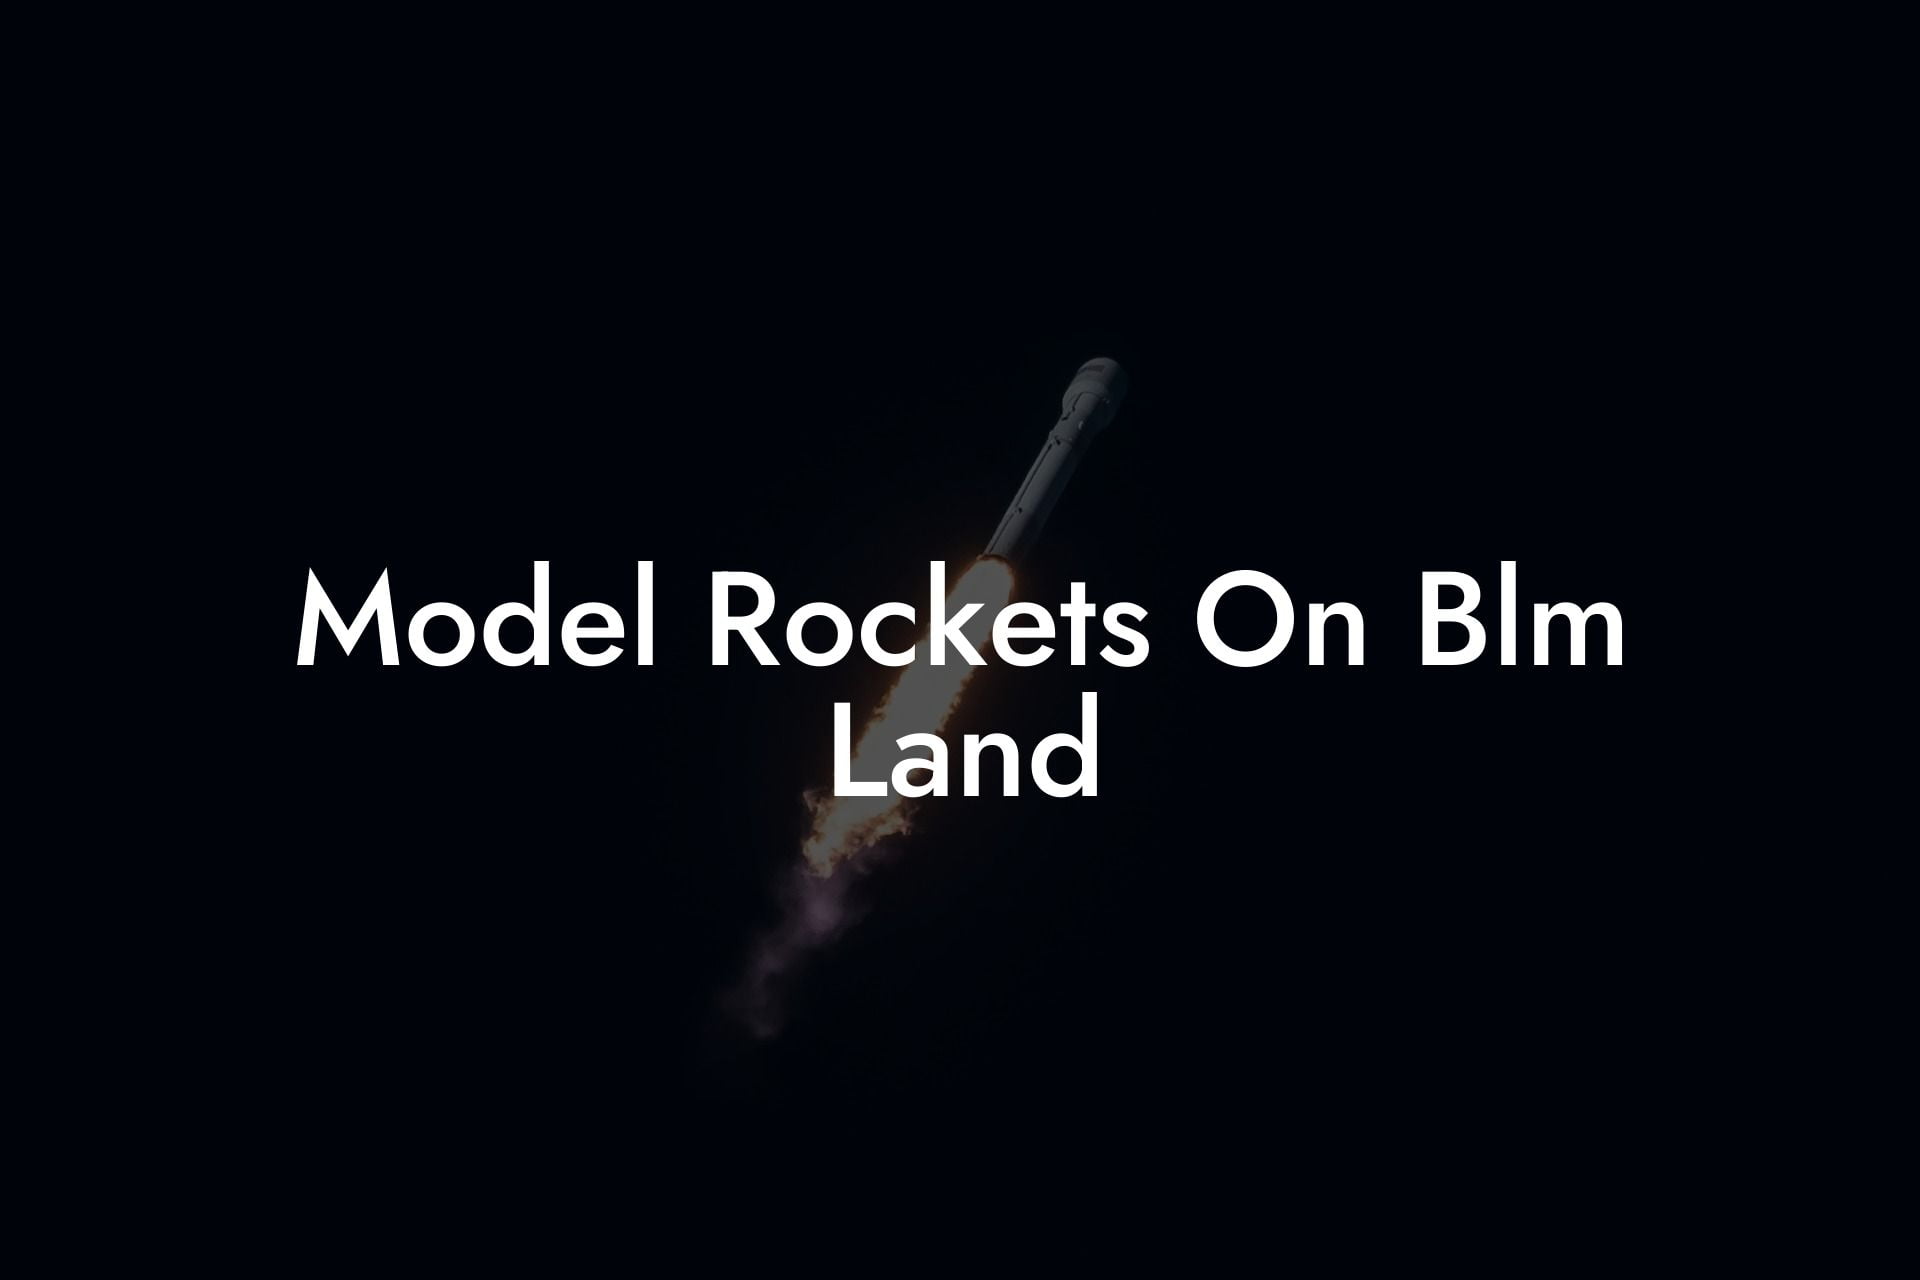 Model Rockets On Blm Land